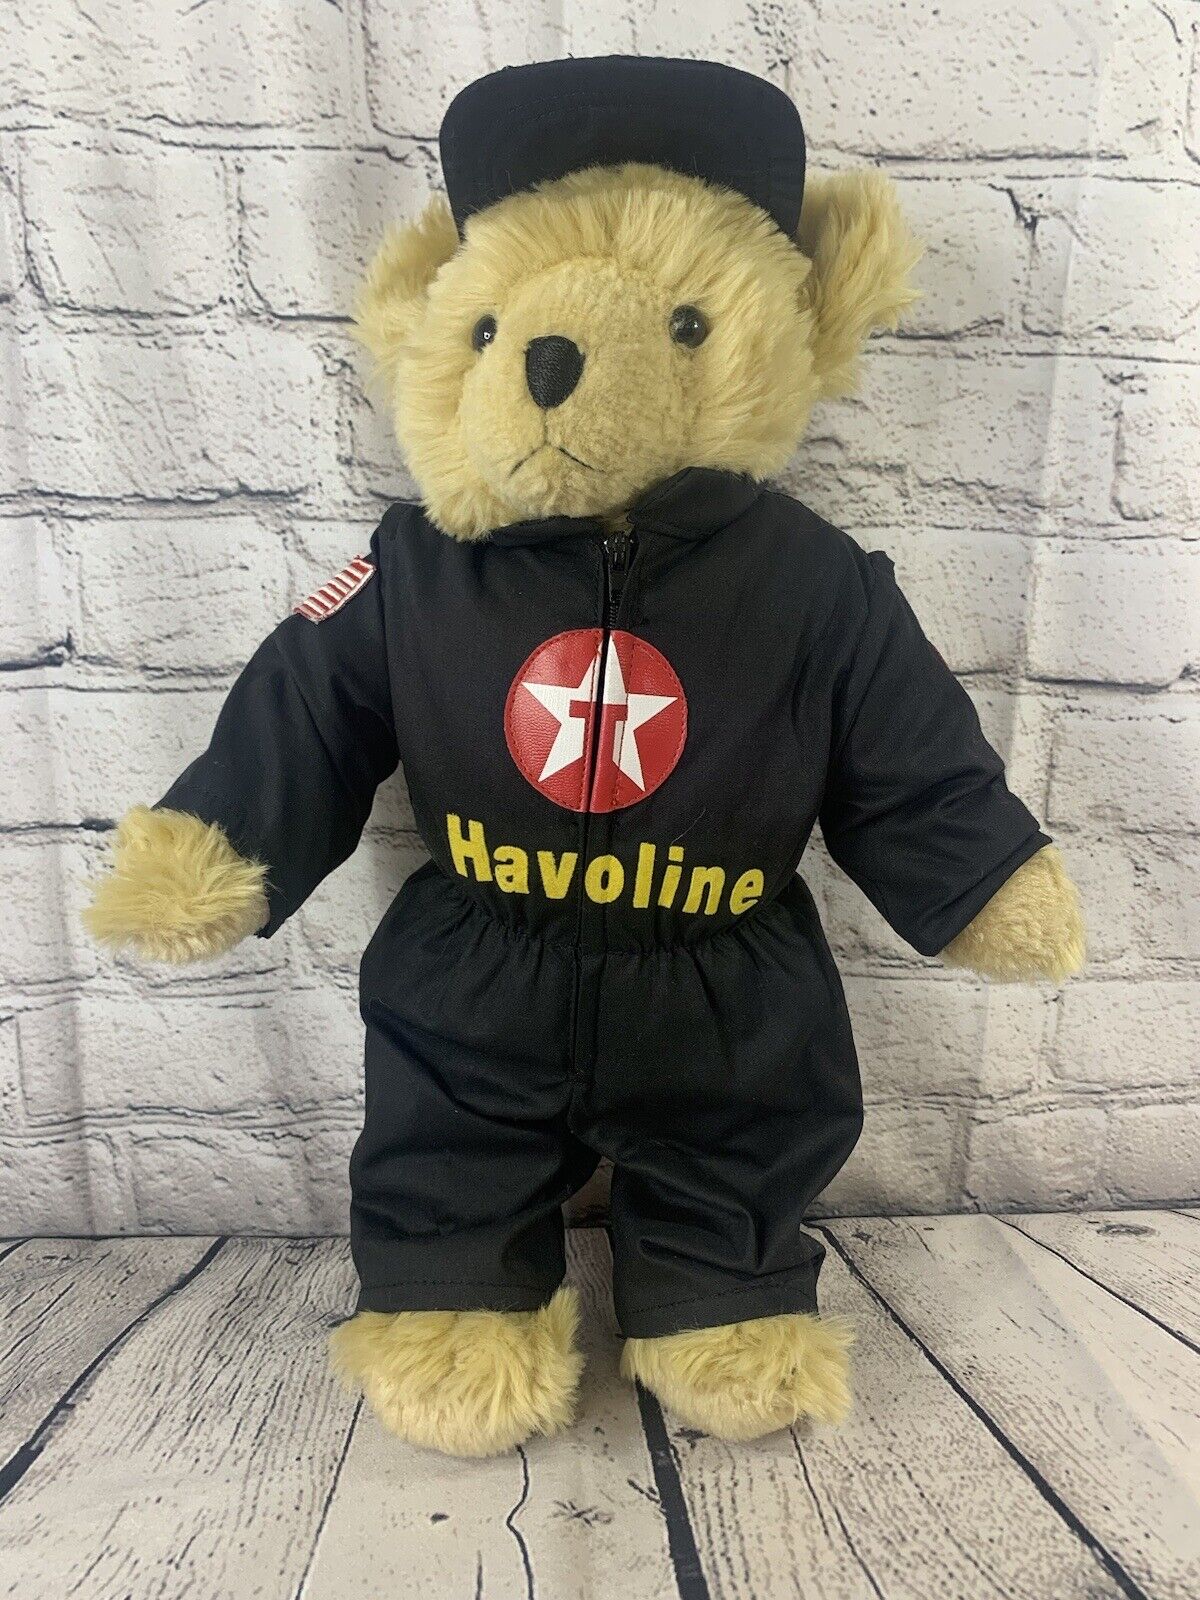 Texaco Bear “Speedy” Texaco/Havoline Racing Plush Stuffed Animal Toy Collectible